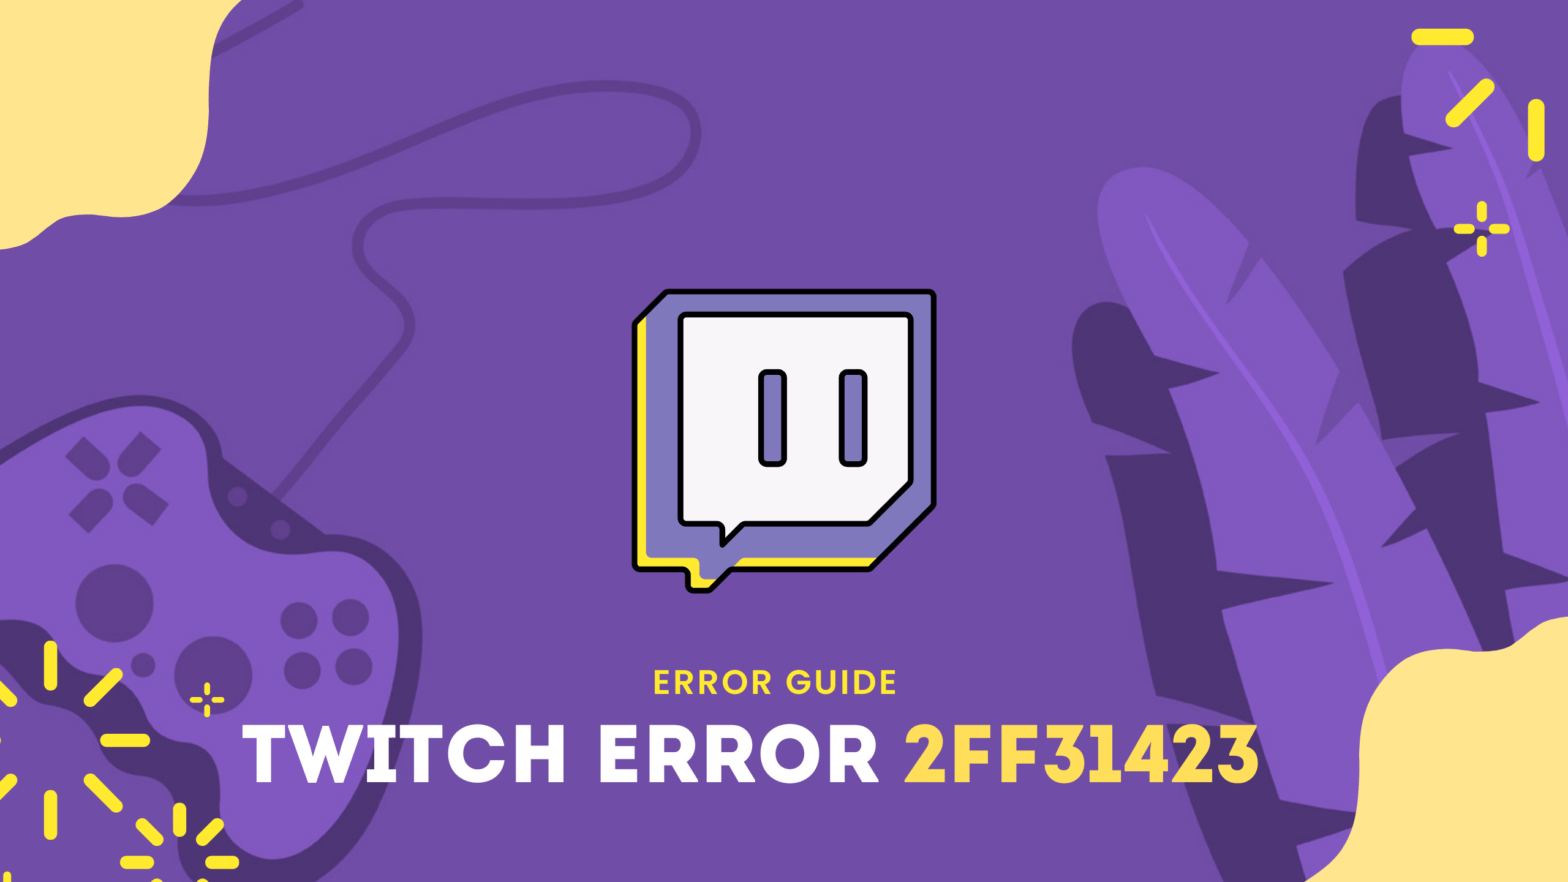 Twitch Error Code 2ff31423